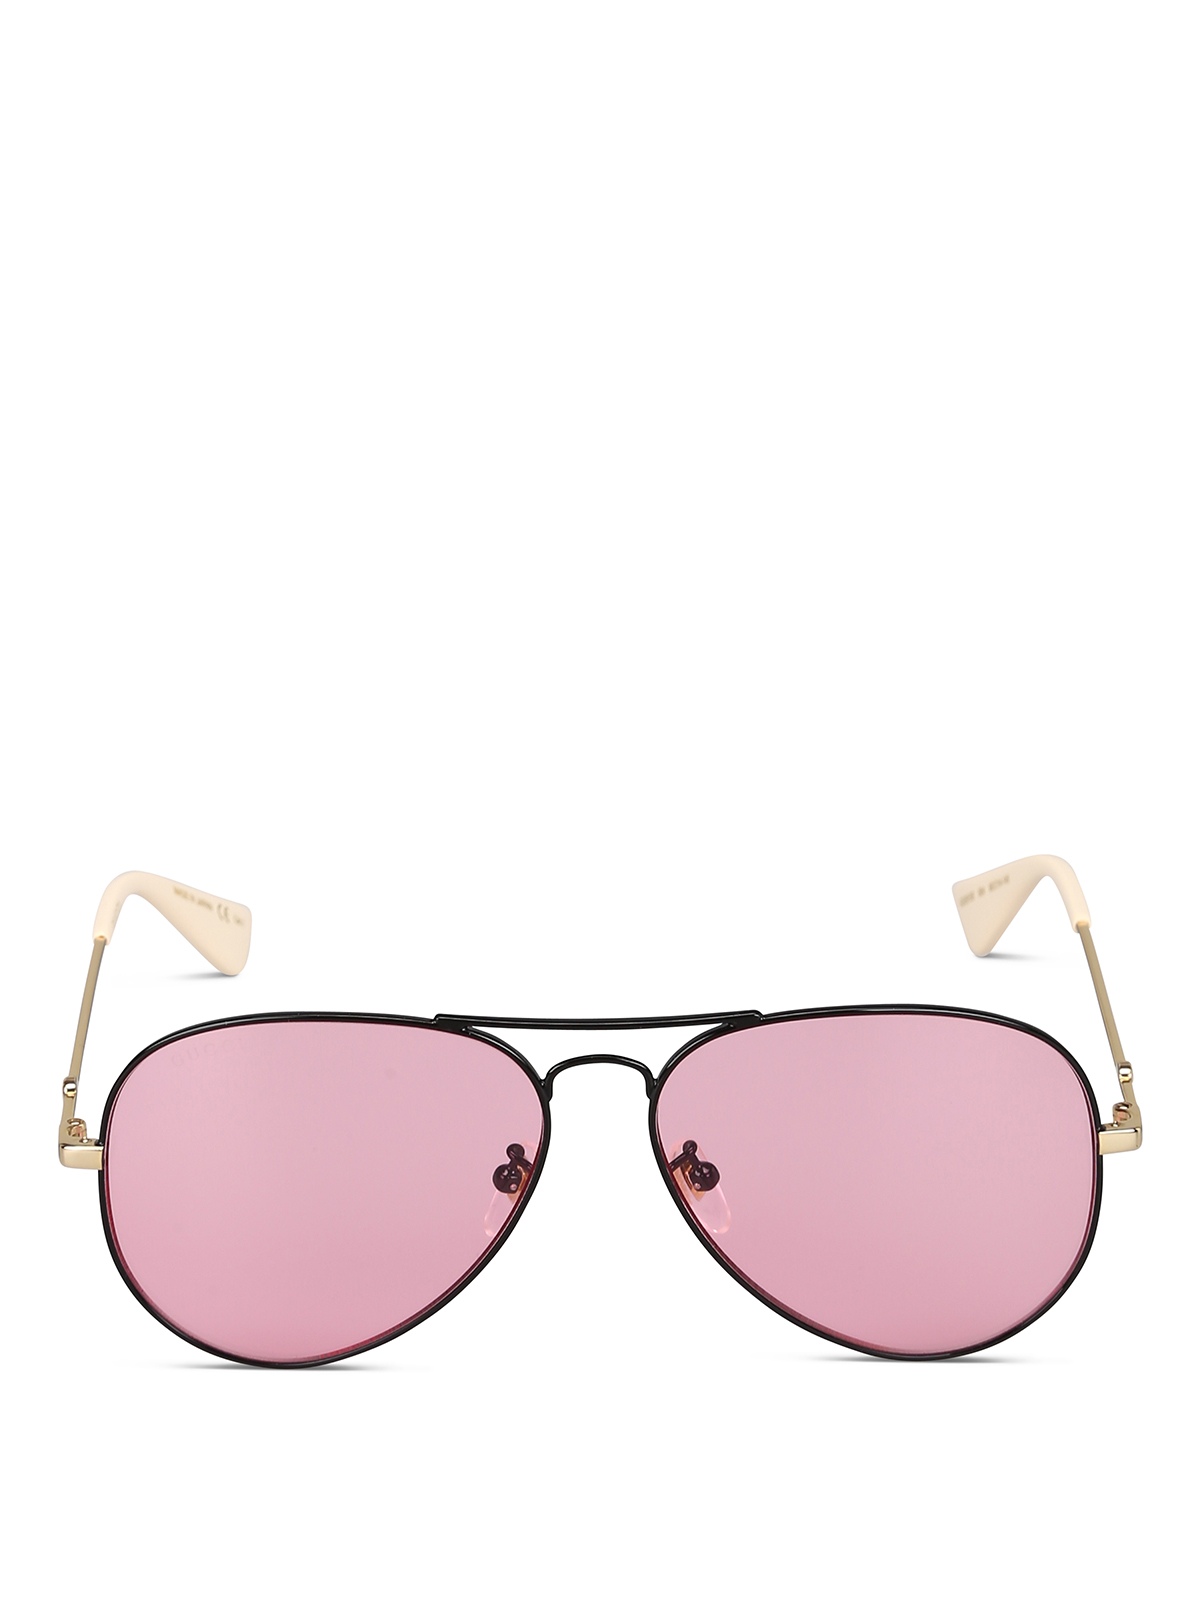 Gucci - Pink lens aviator sunglasses 